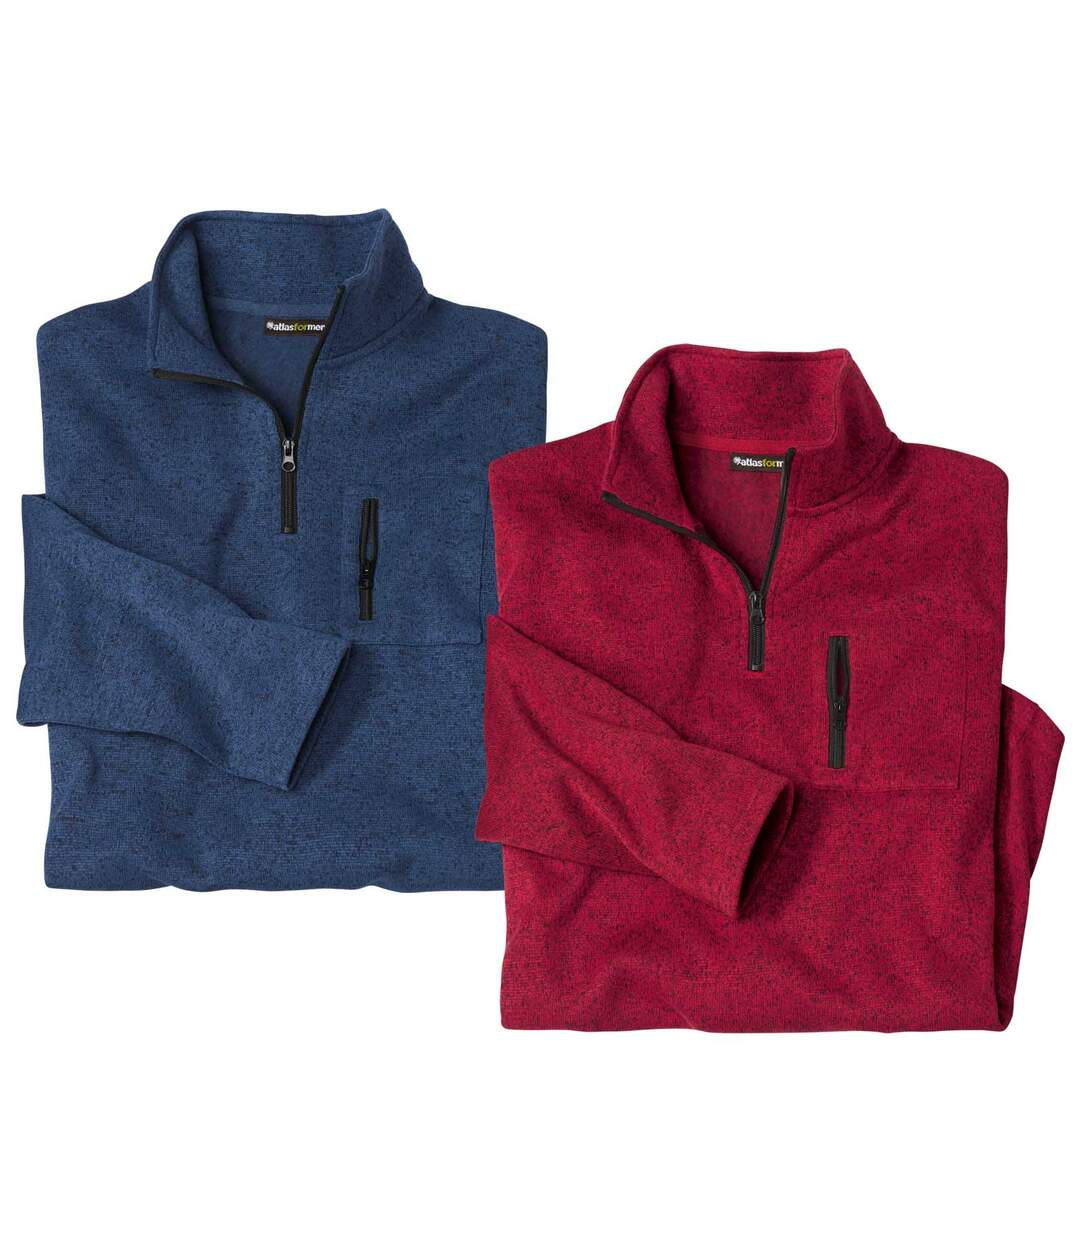 Pack of 2 Men's Quarter-Zip Sweatshirts - Mottled Blue and Red Atlas For Men